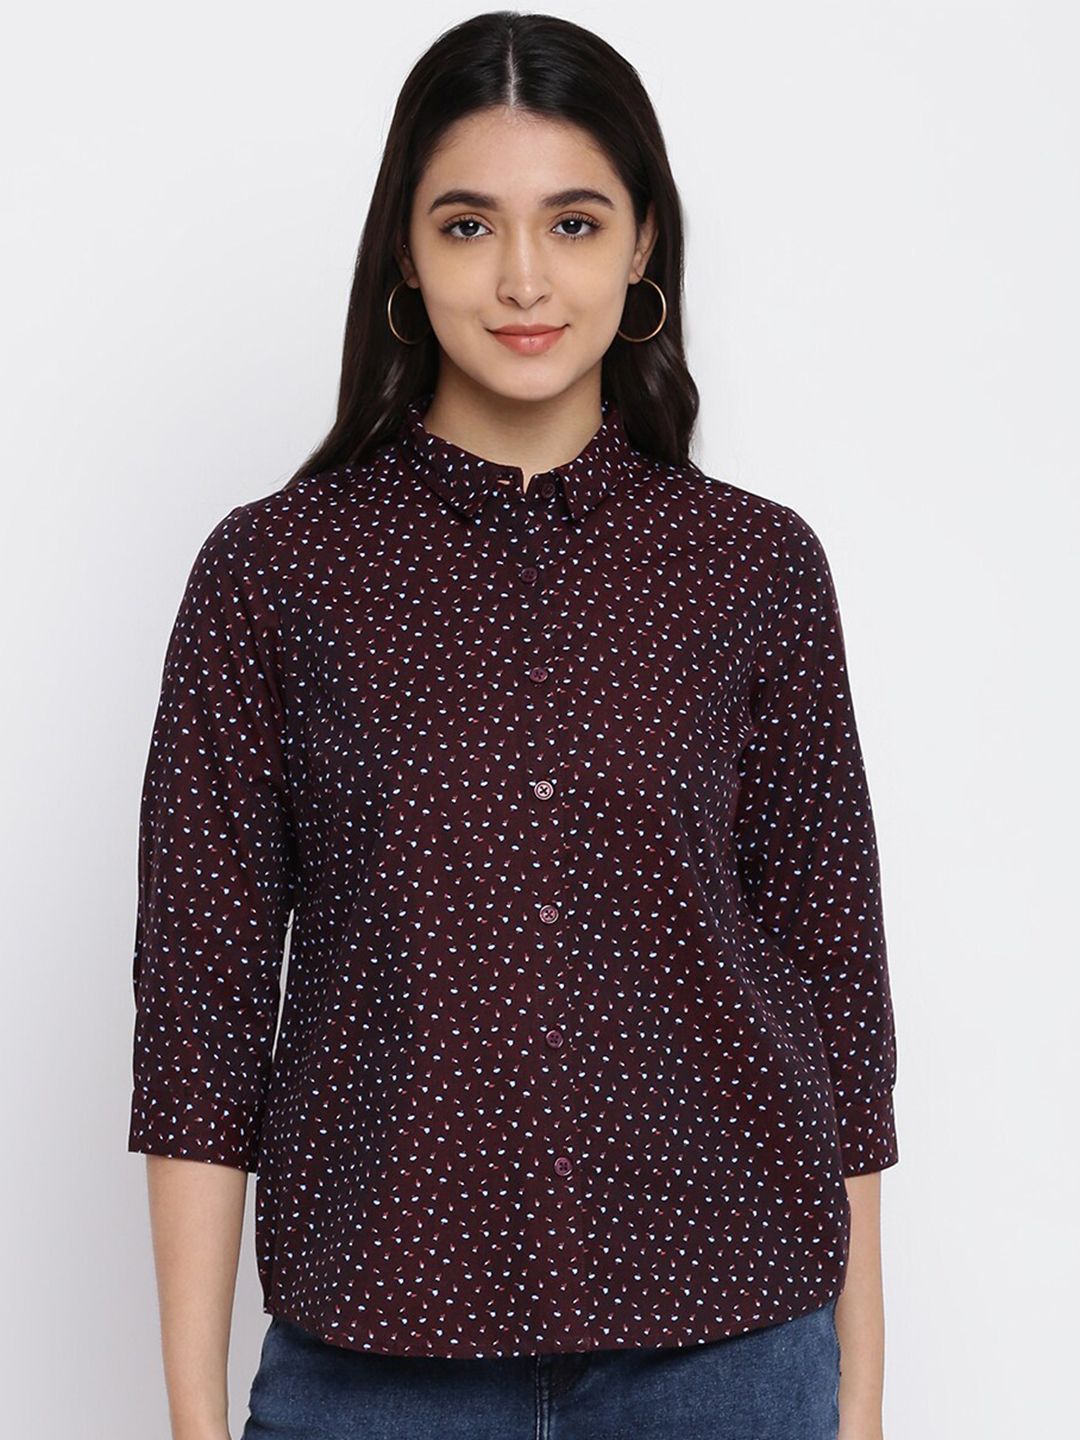 abof Burgundy Geometric Print Shirt Style Top Price in India